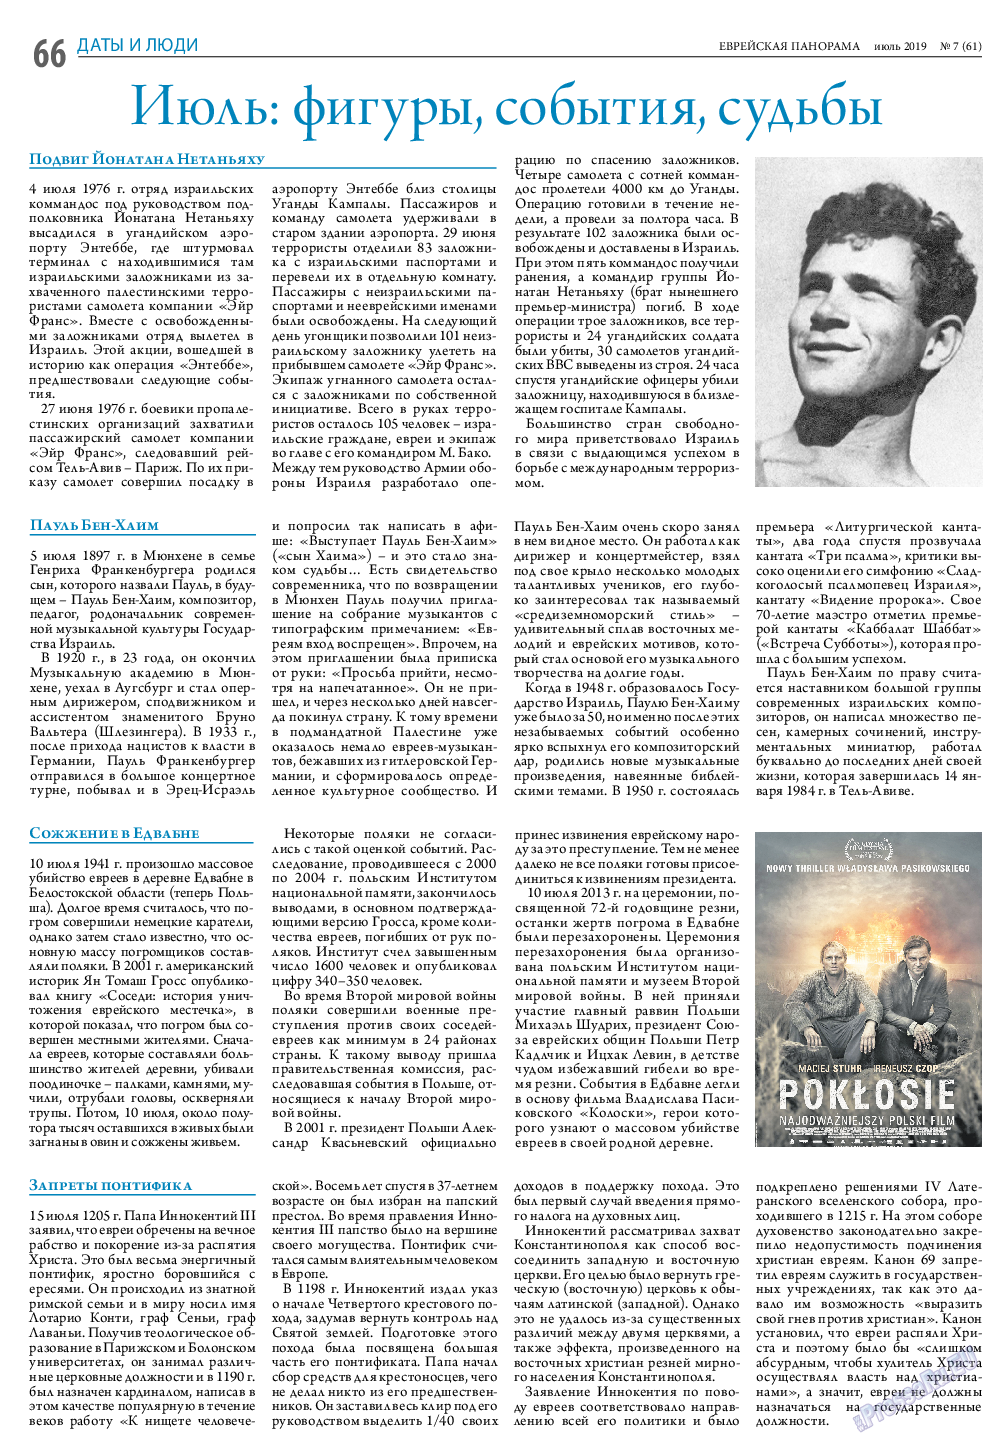 Еврейская панорама, газета. 2019 №7 стр.66